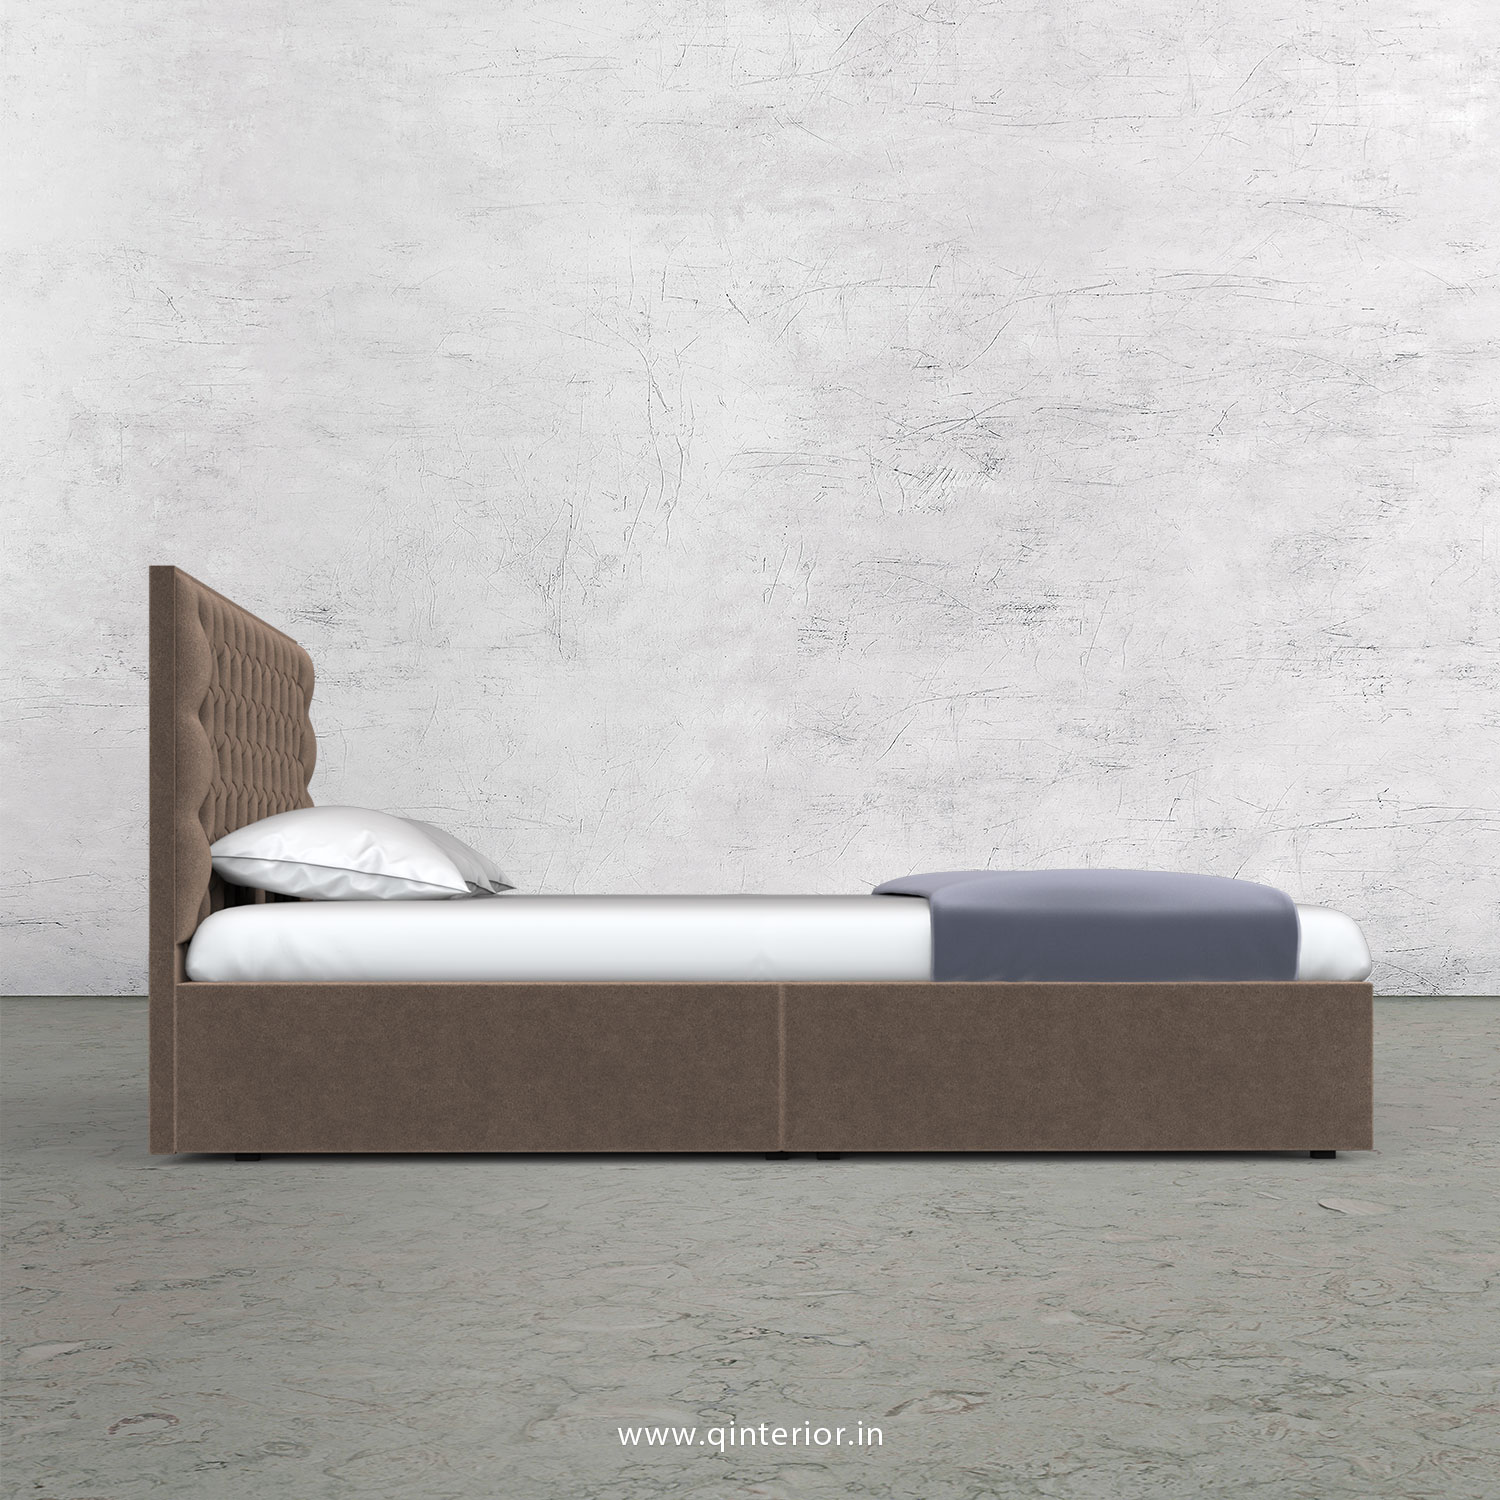 Orion King Size Storage Bed in Velvet Fabric - KBD001 VL02